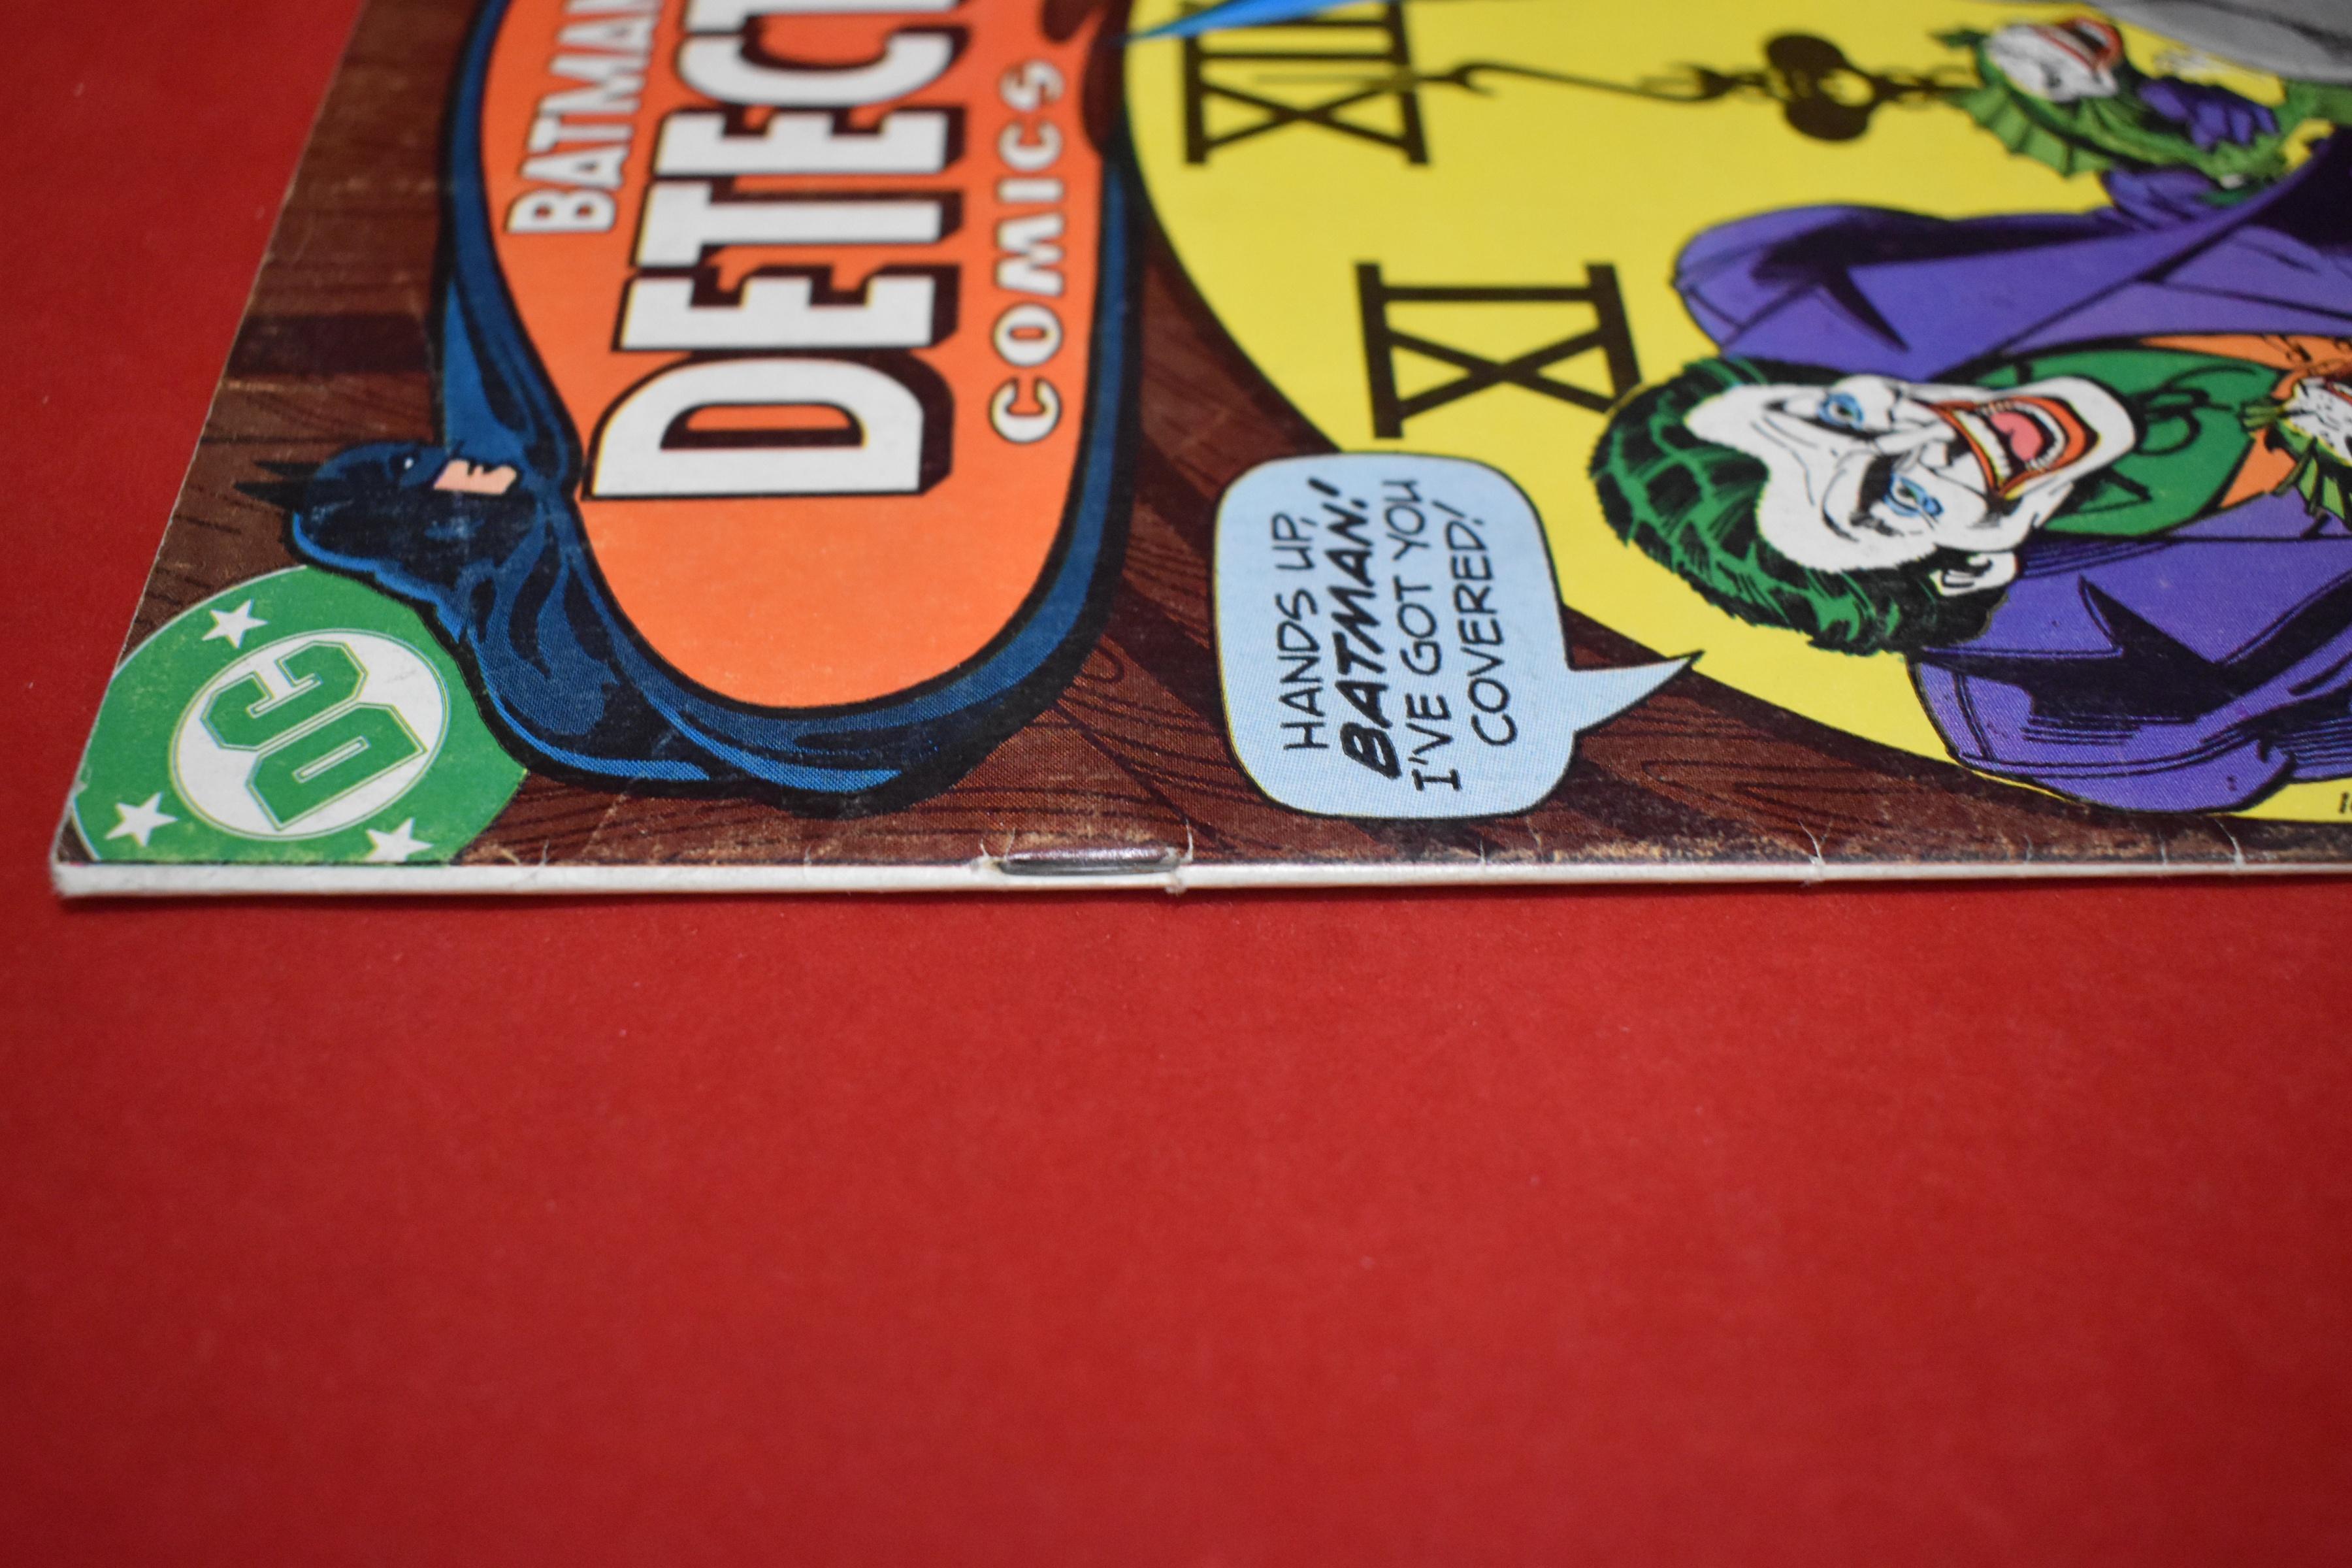 DETECTIVE COMICS #475 | KEY THE LAUGHING FISH! | MARSHALL ROGERS JOKER COVER